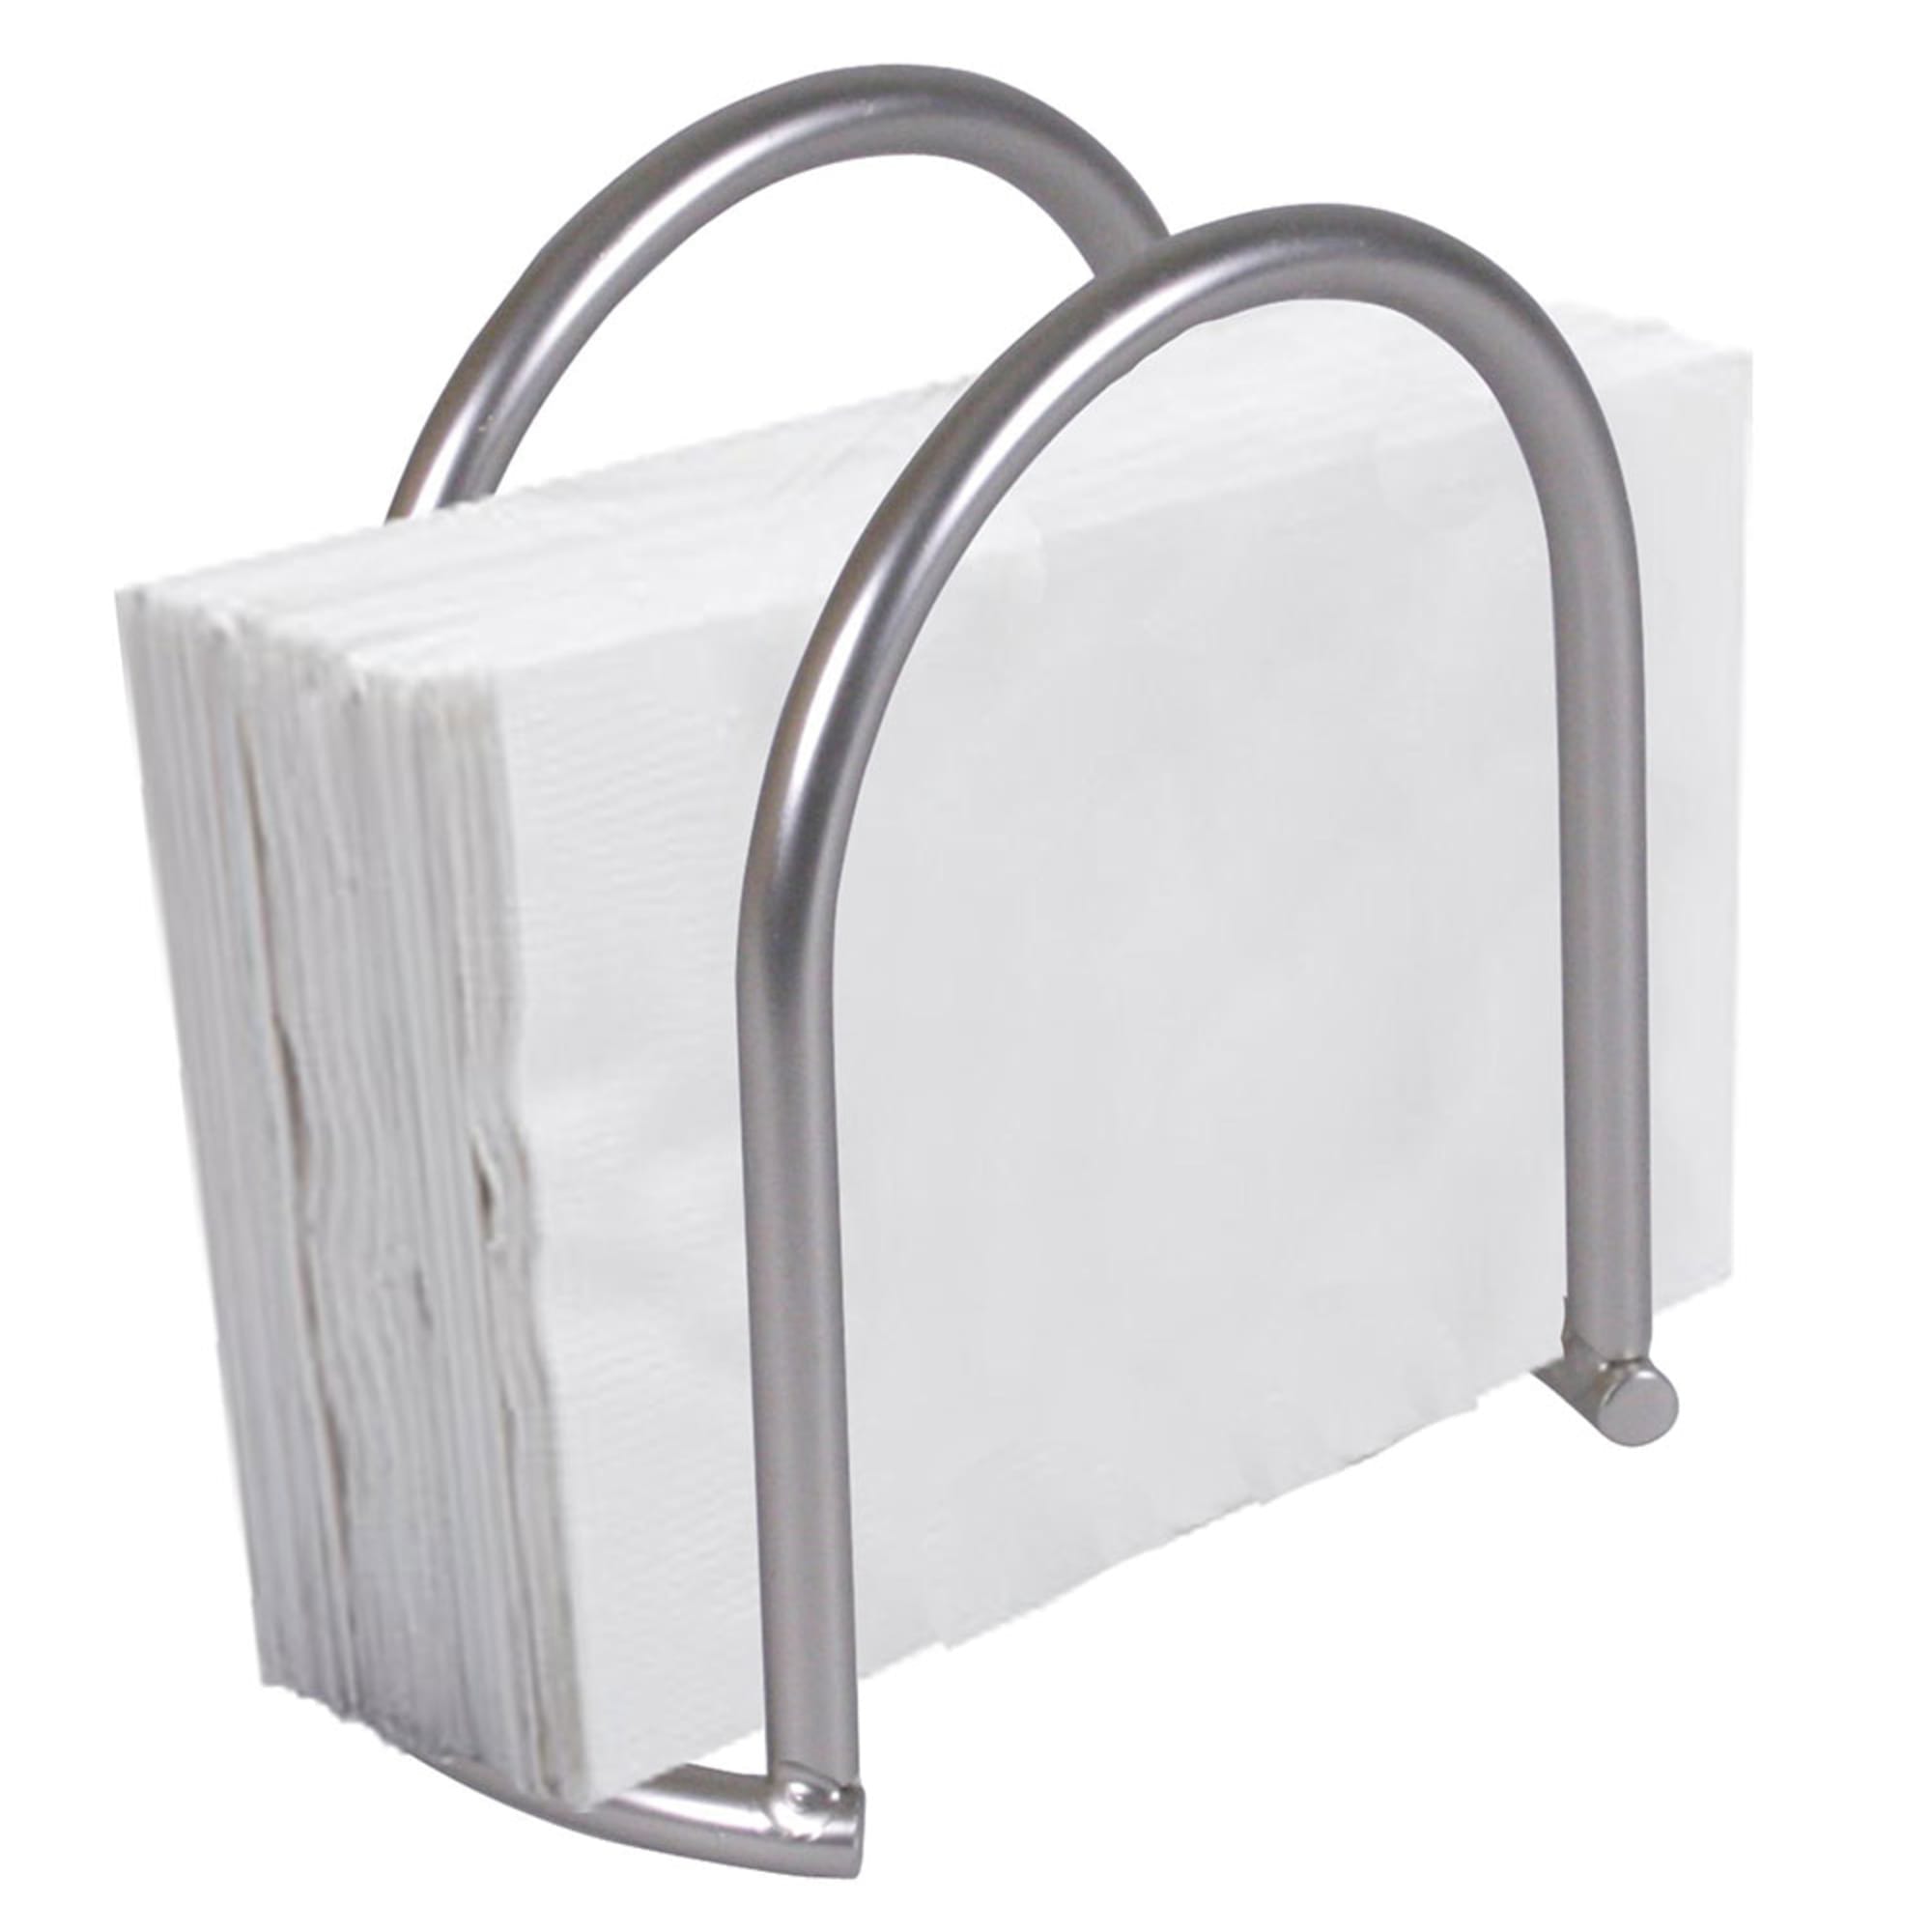 Michael Graves Design Simplicity Freestanding Upright Steel Napkin Holder, Satin Nickel $5 EACH, CASE PACK OF 6